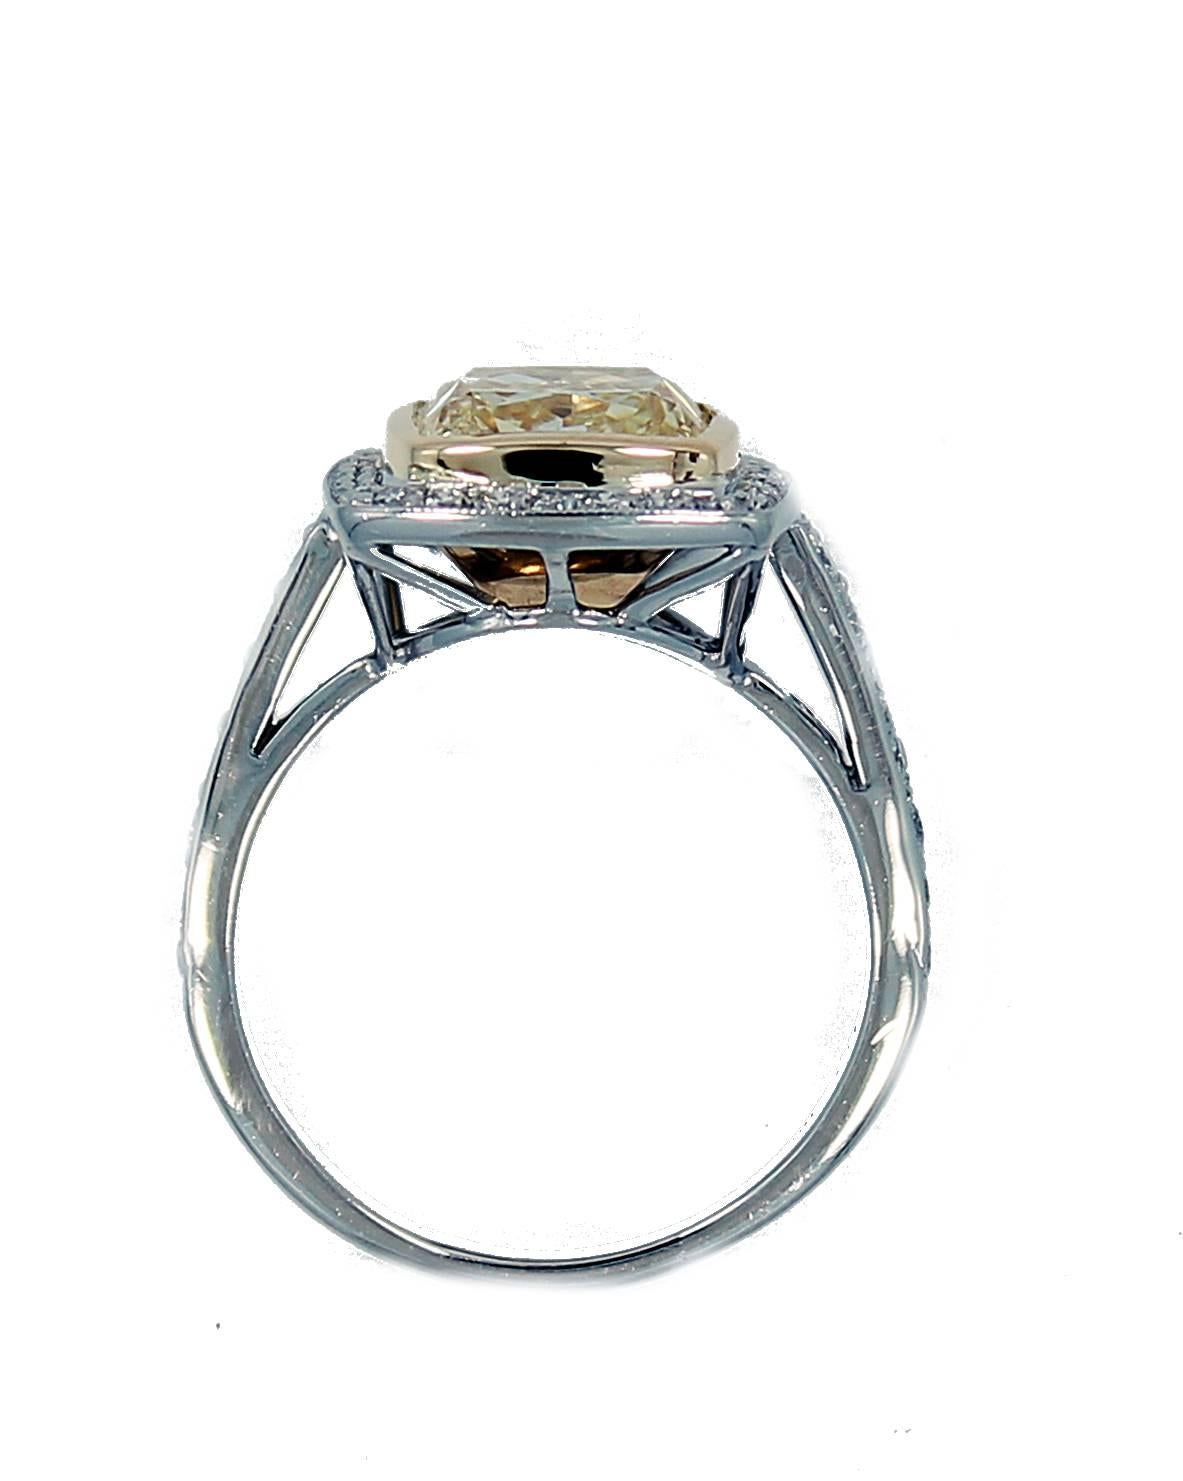 5.55 Carat Fancy Light Yellow Radiant Diamond Engagement Ring For Sale 1